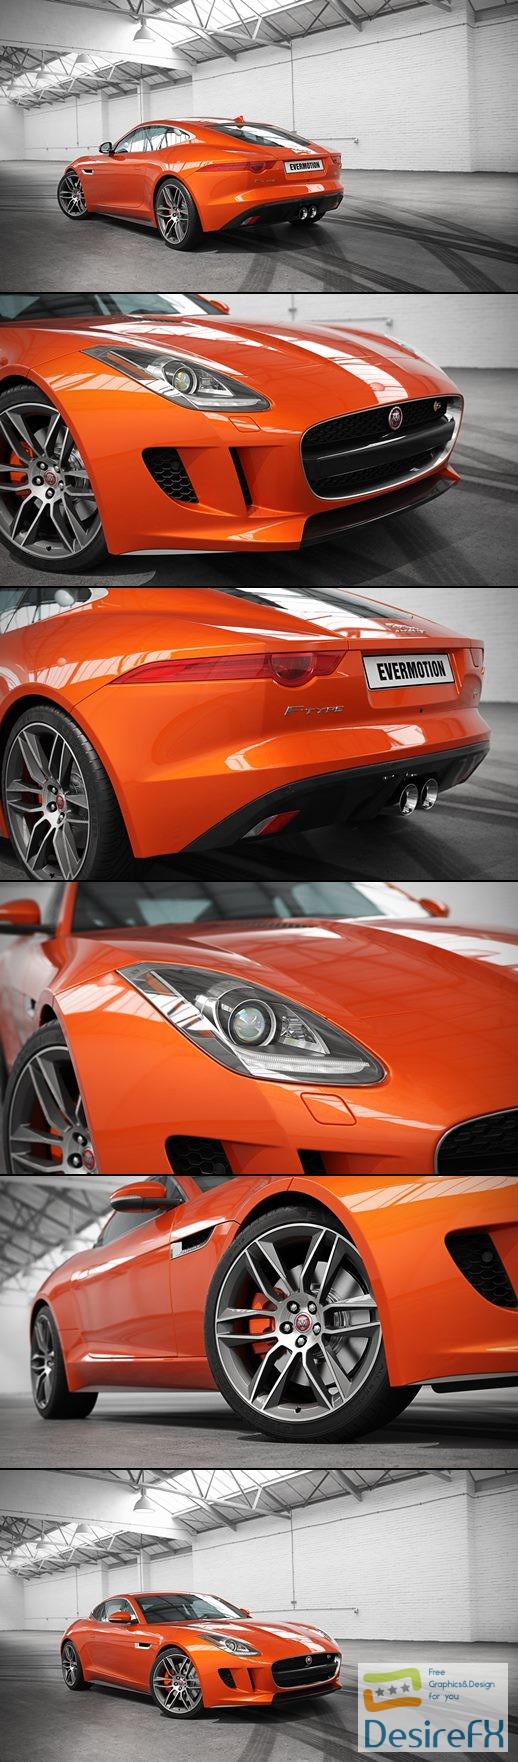 Jaguar F-TYPE 2017 EVERMOTION HD Models Cars Vol.6 3D Model